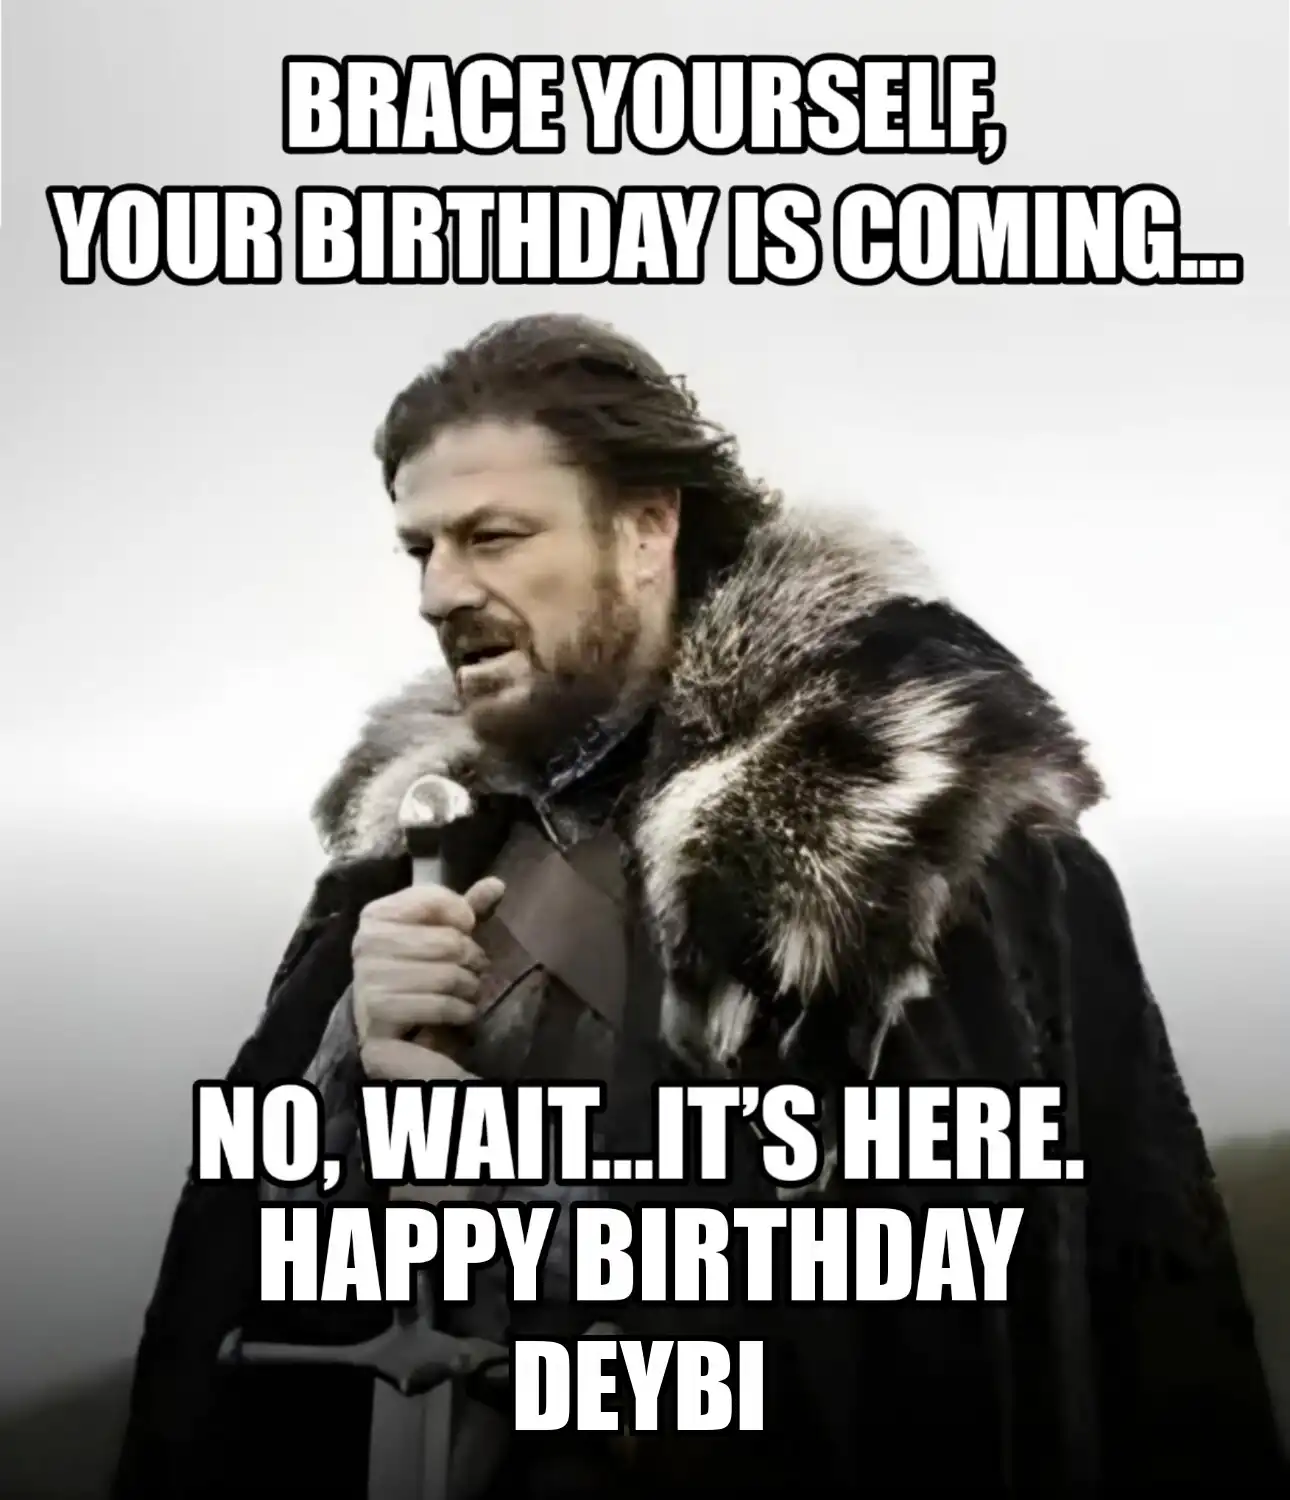 Happy Birthday Deybi Brace Yourself Your Birthday Is Coming Meme